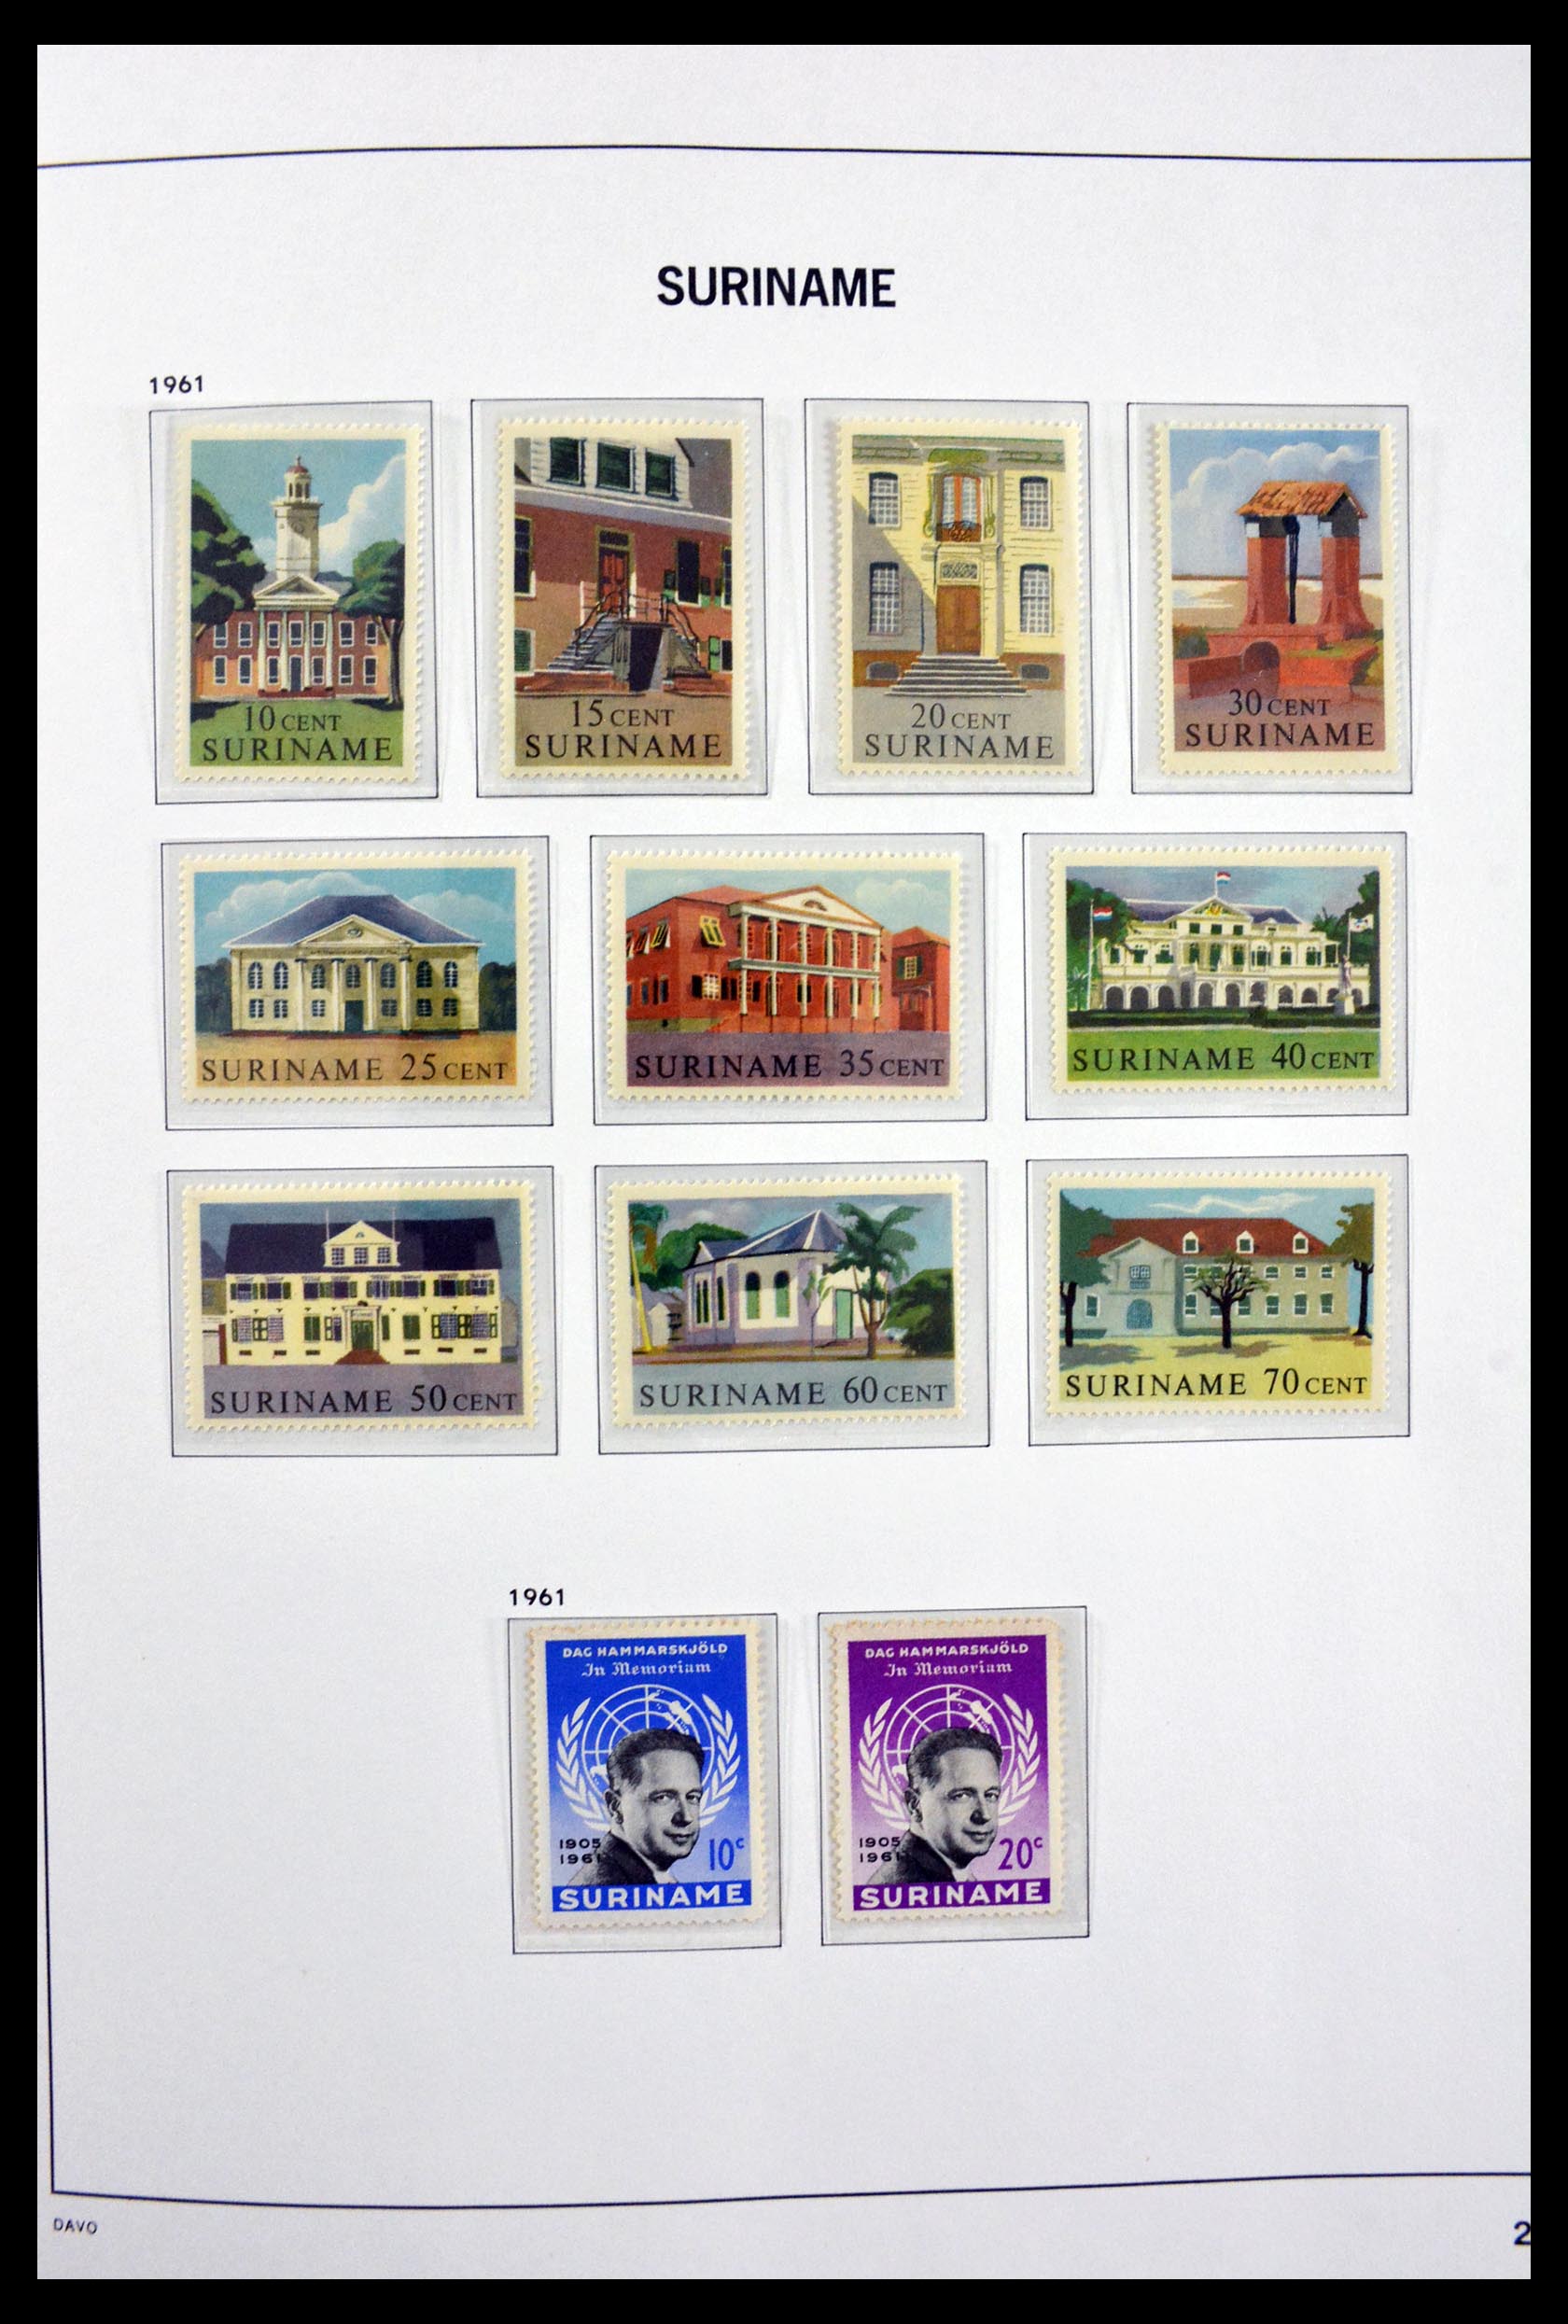 29801 022 - 29801 Suriname 1873-1975.